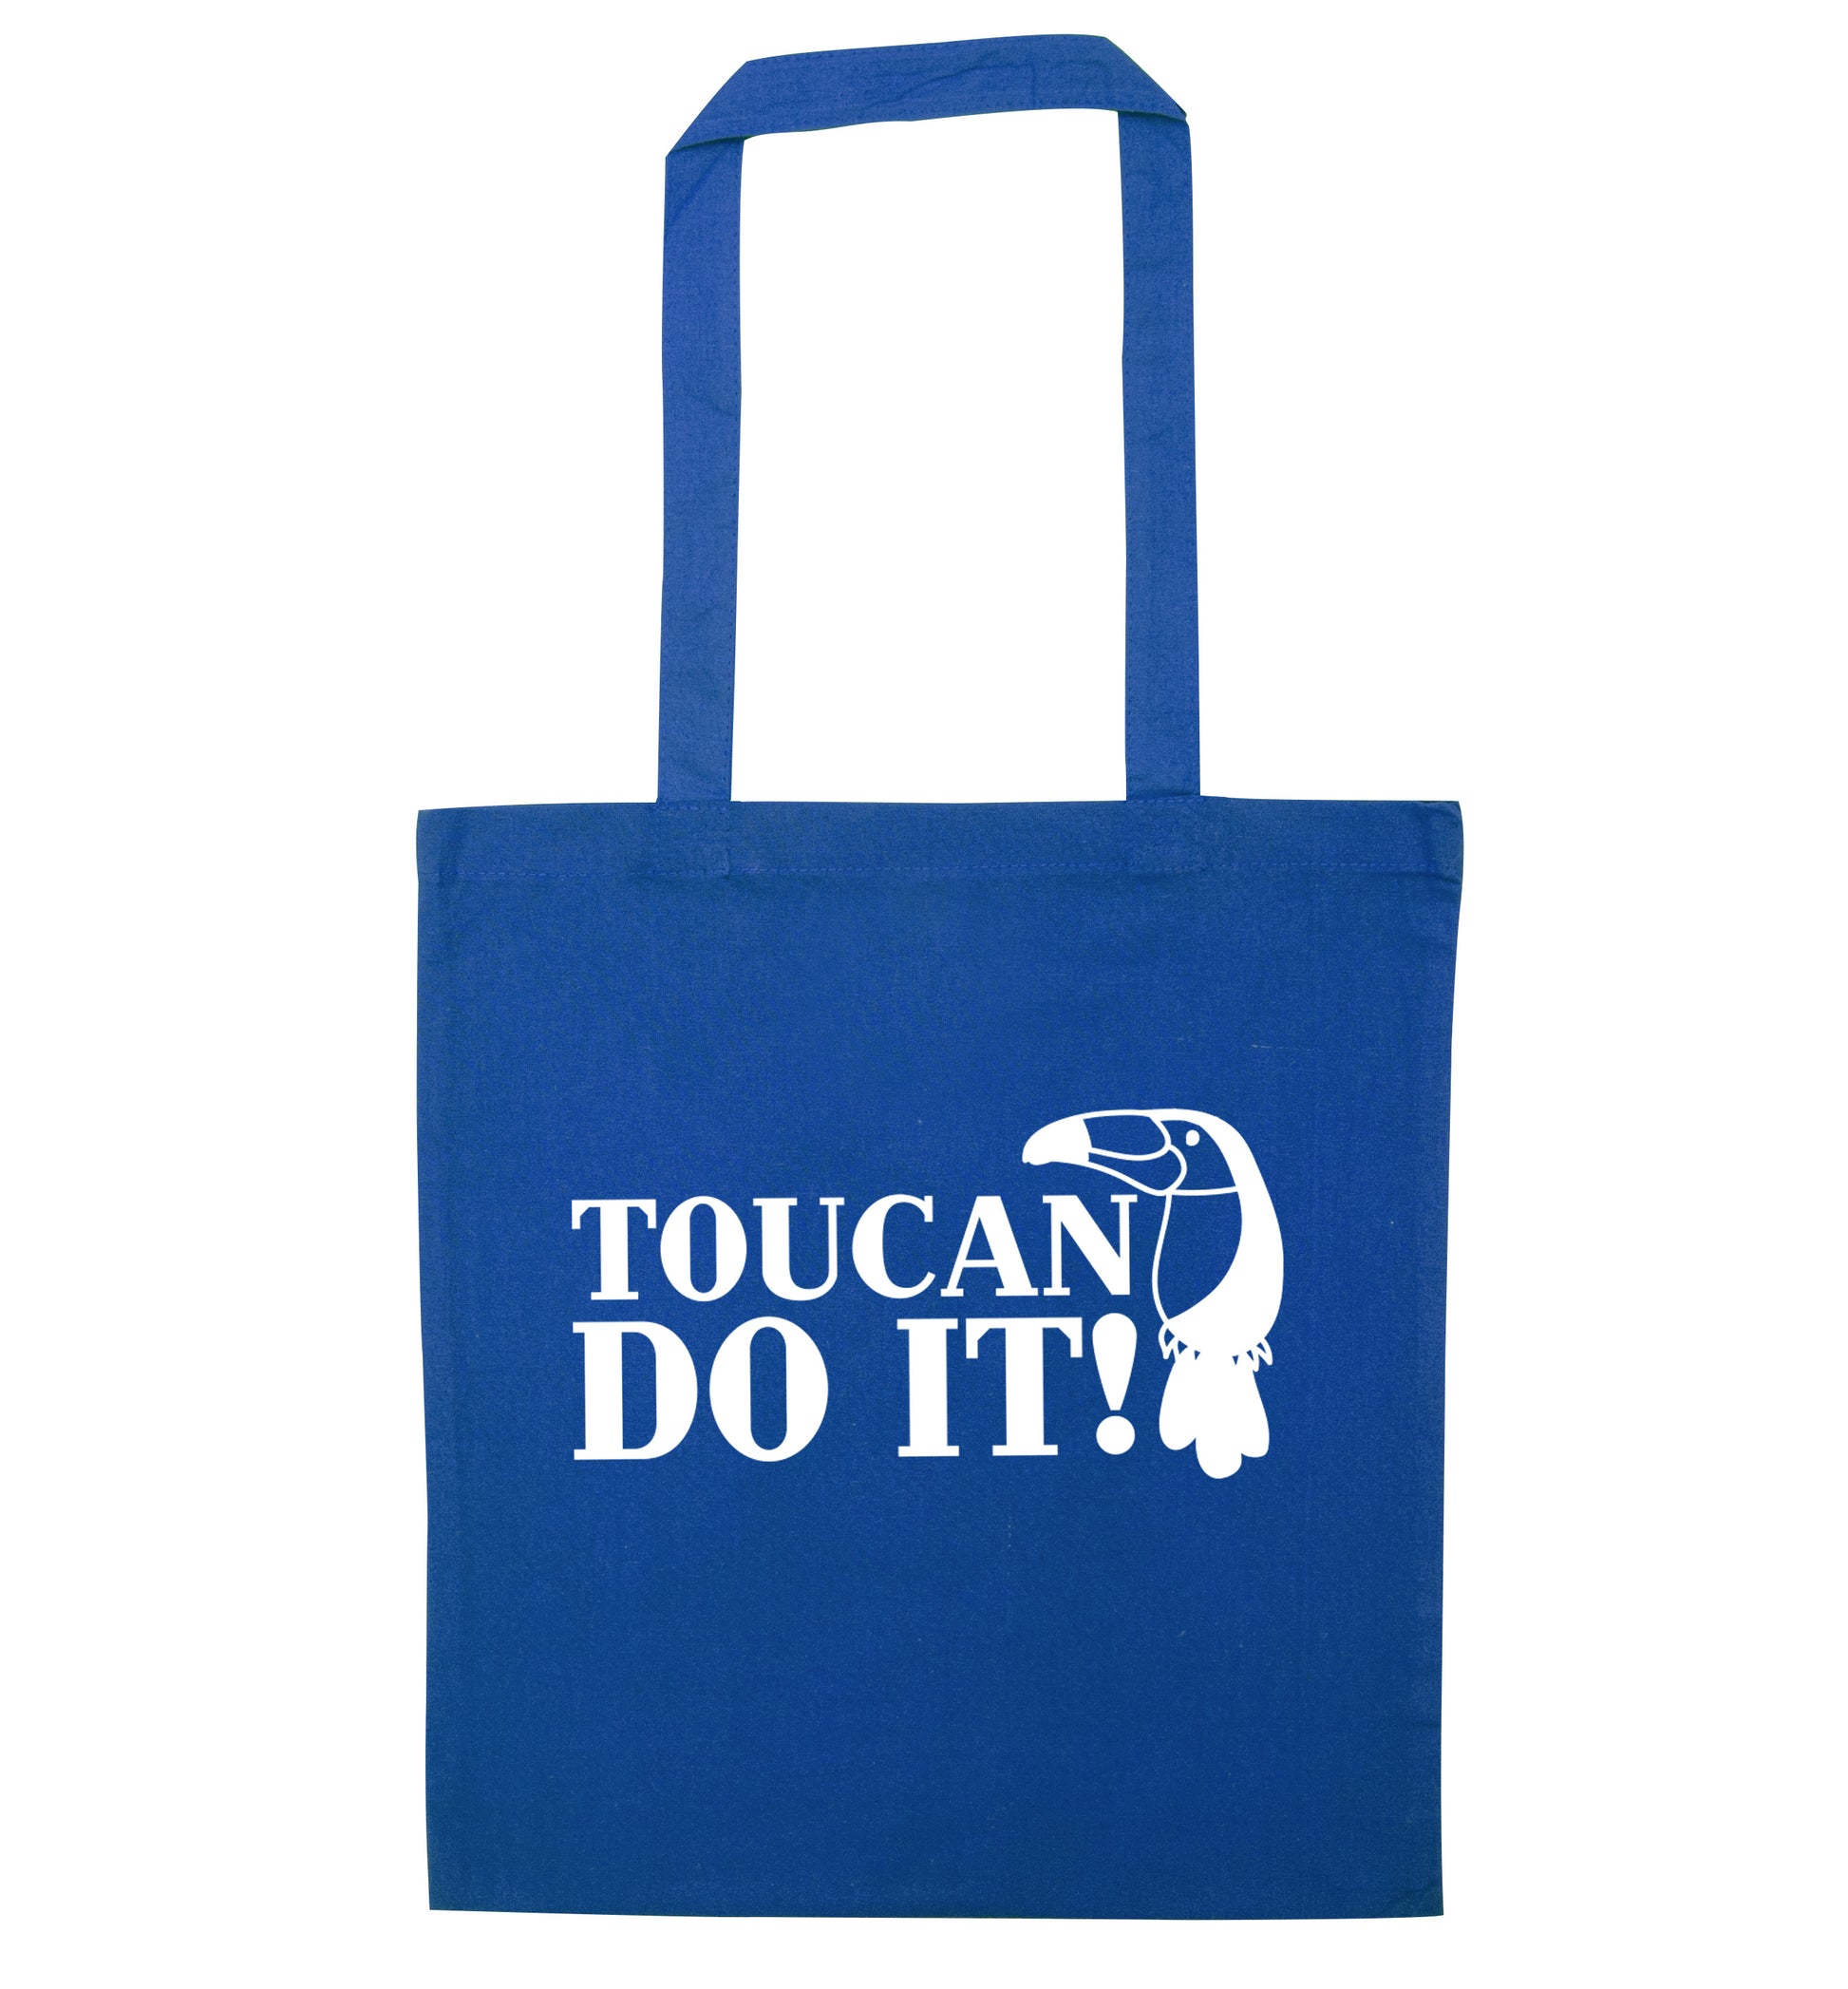 Toucan do it! blue tote bag